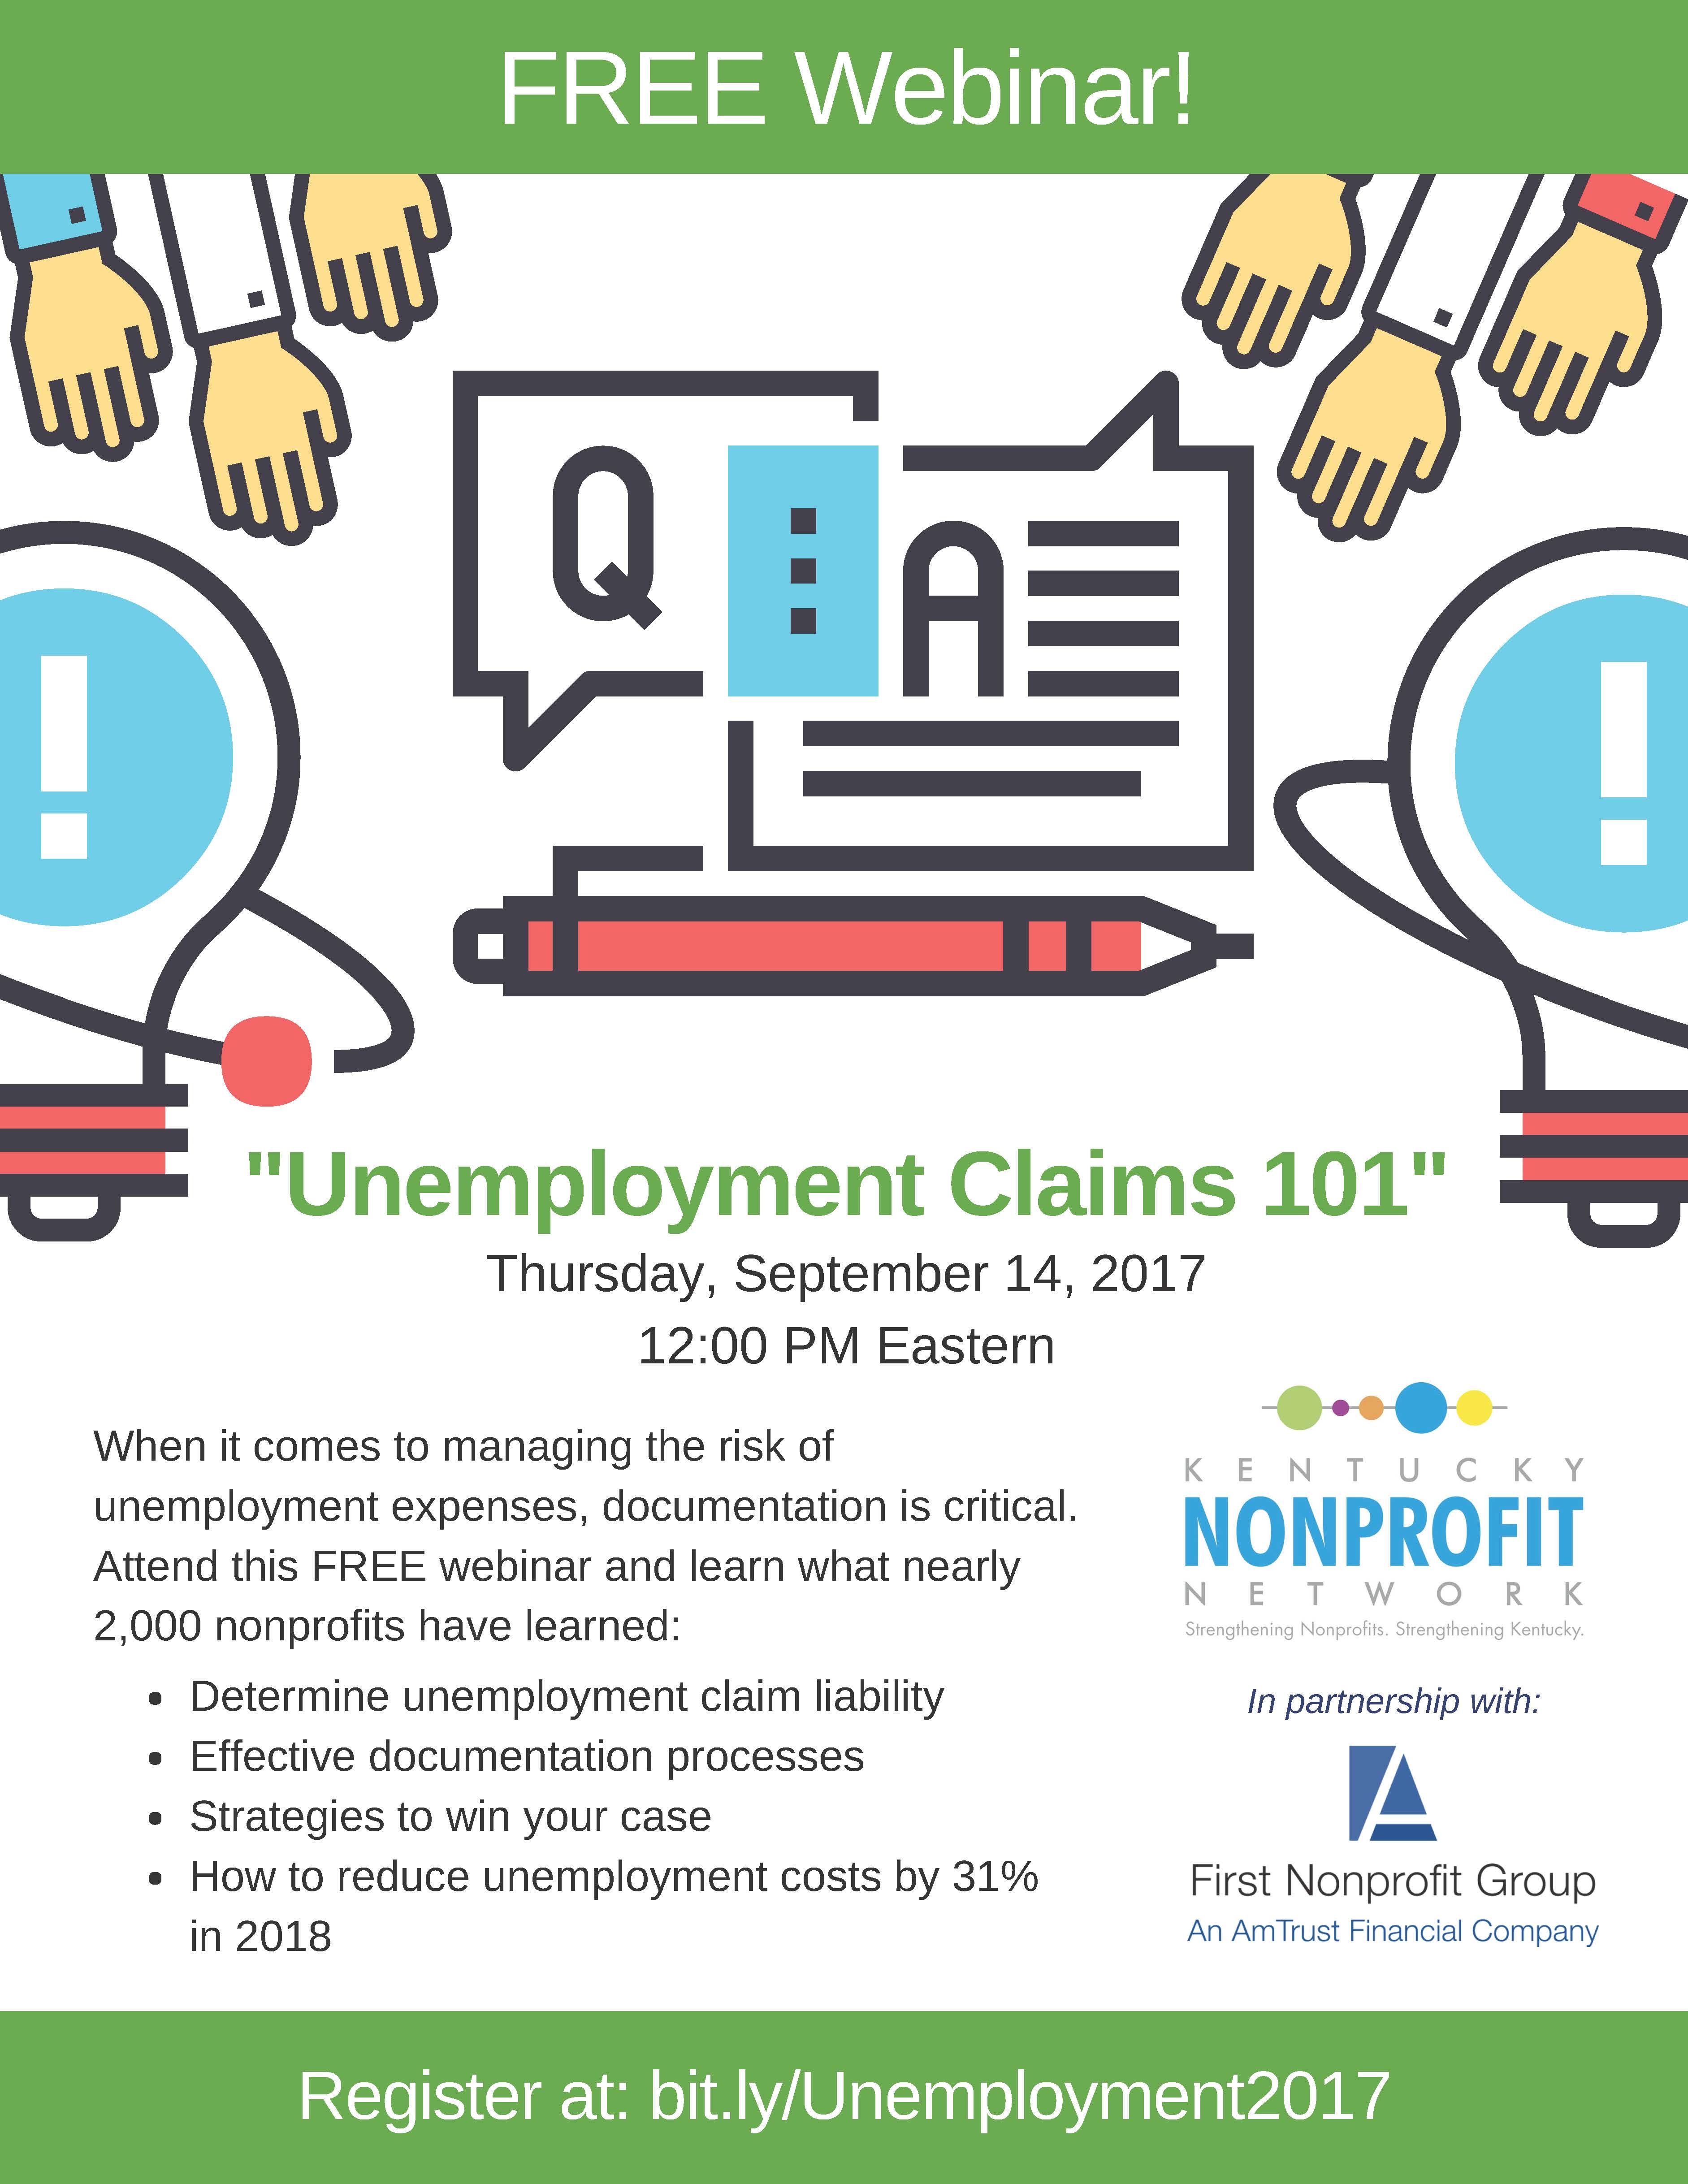 FREE Webinar Unemployment Claims 101 Kentucky Nonprofit Network